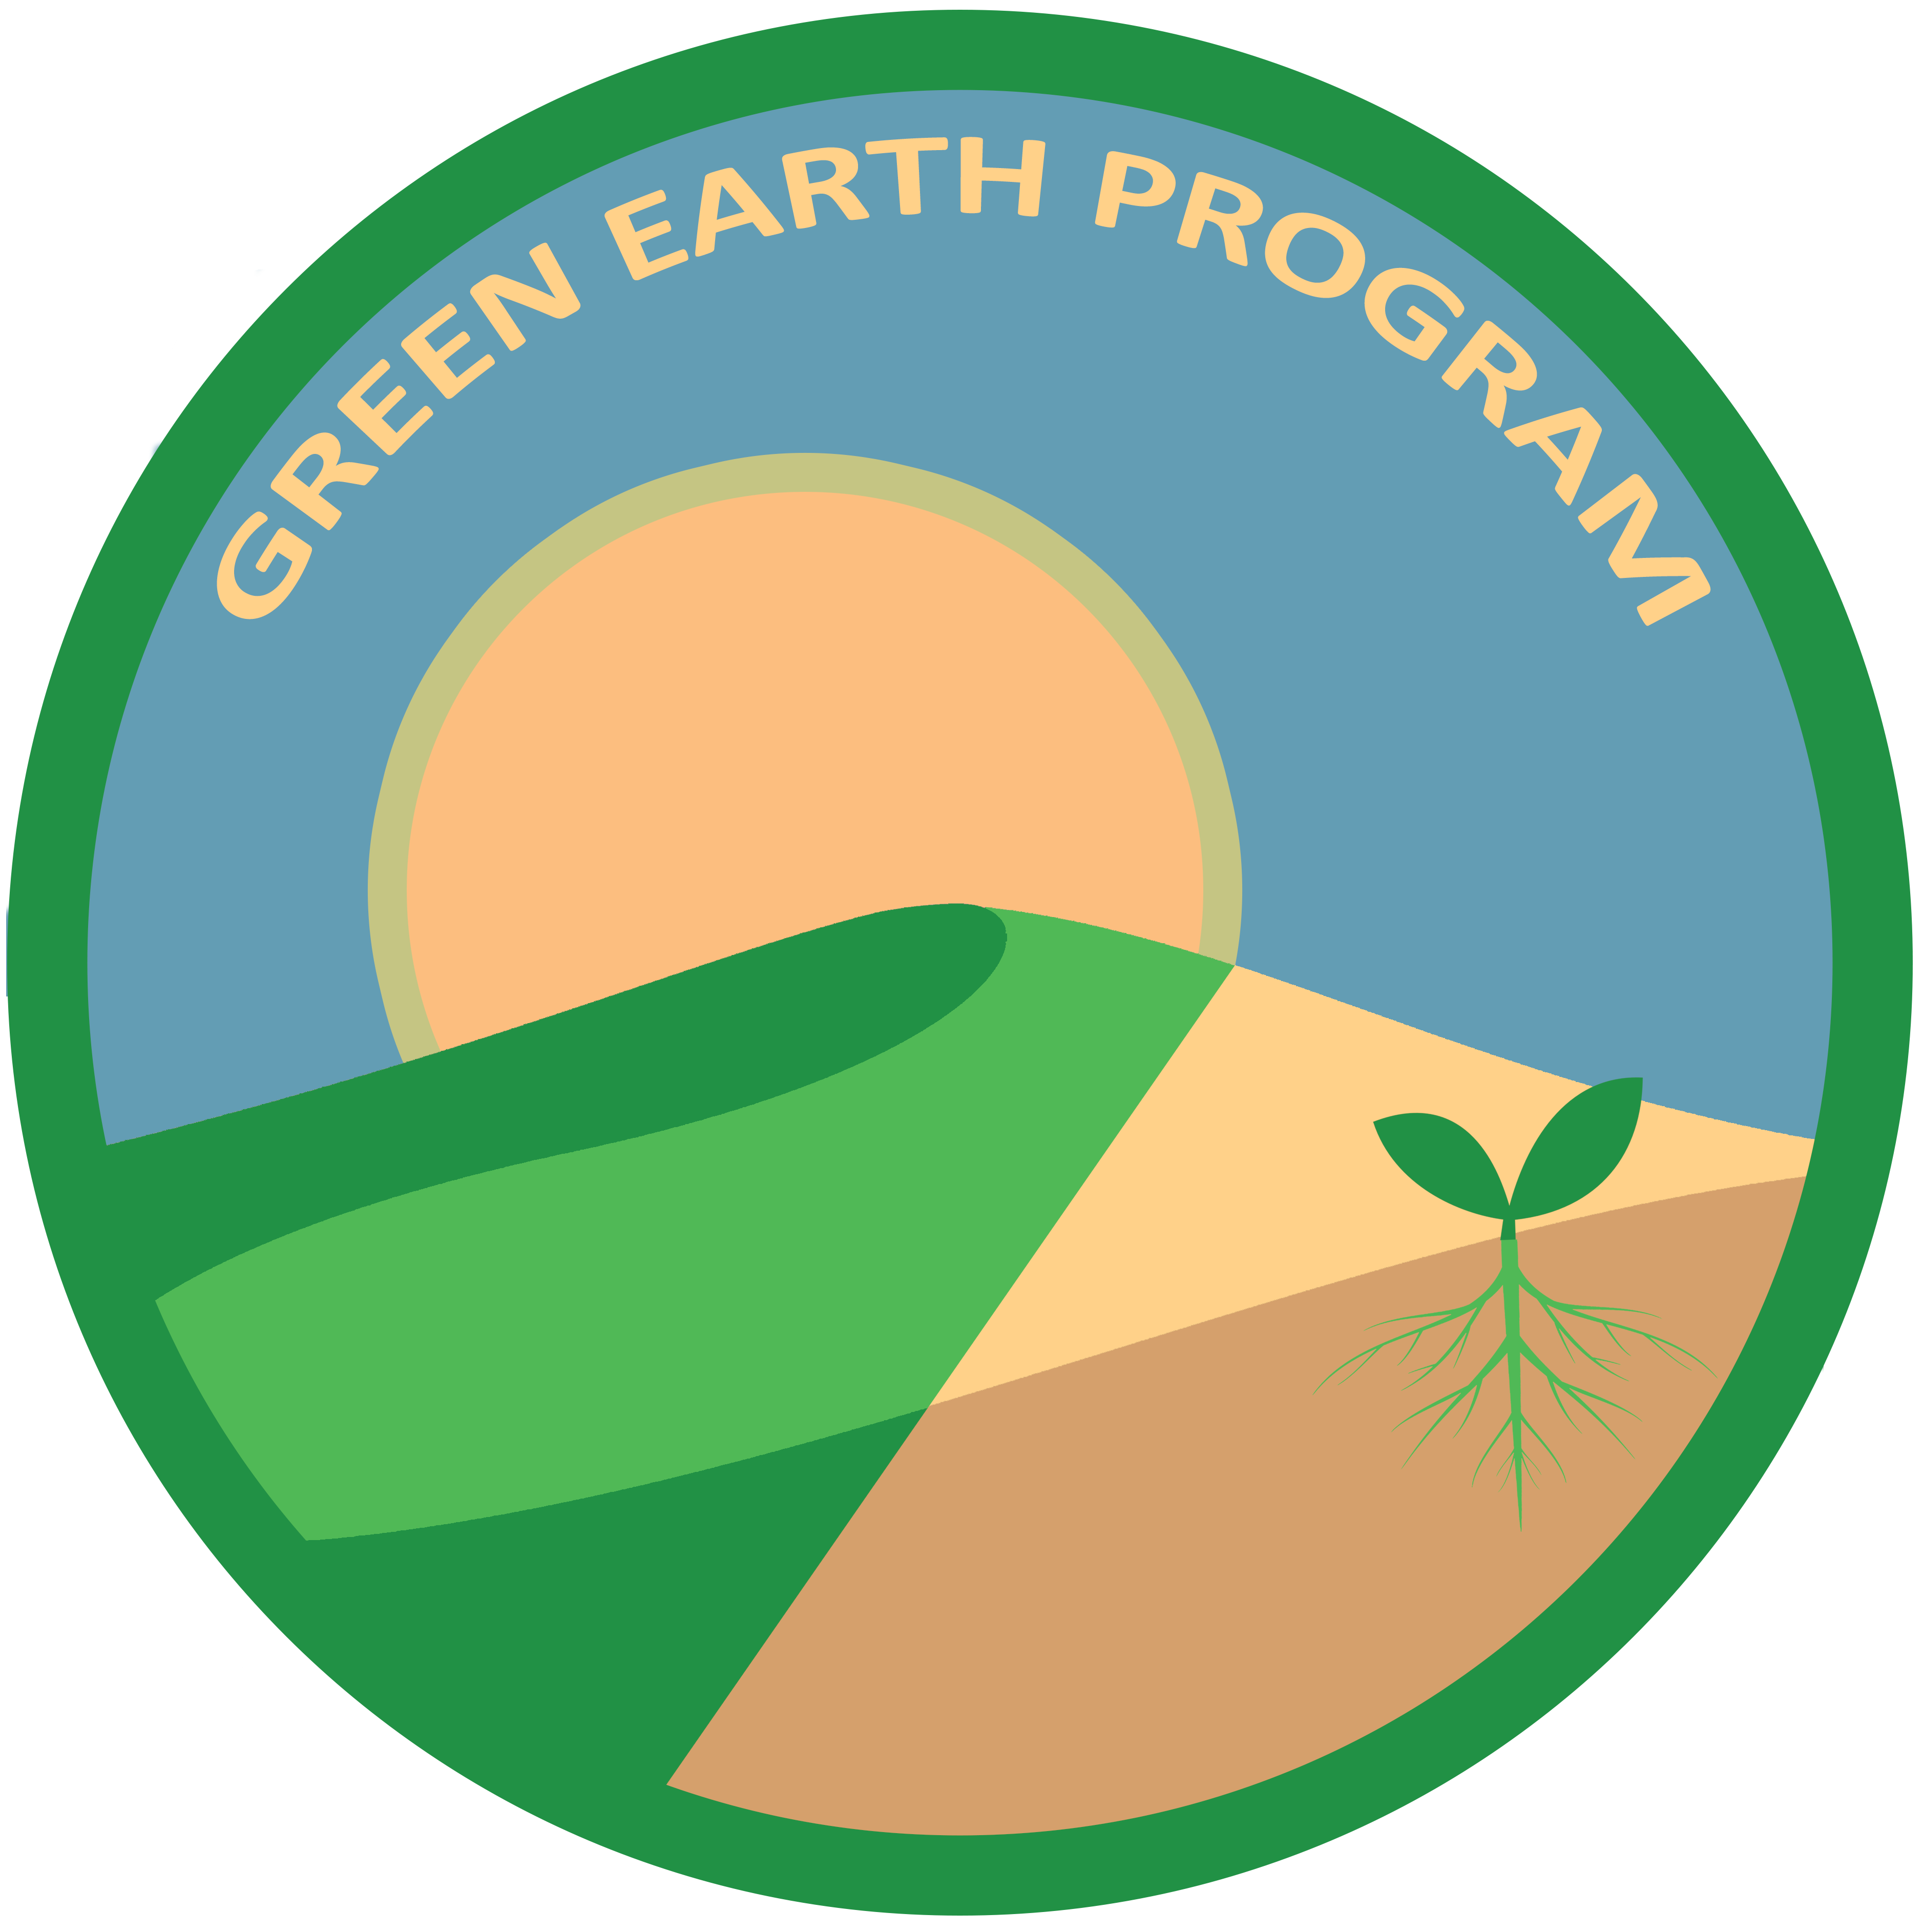 Logo - Green Earth Program